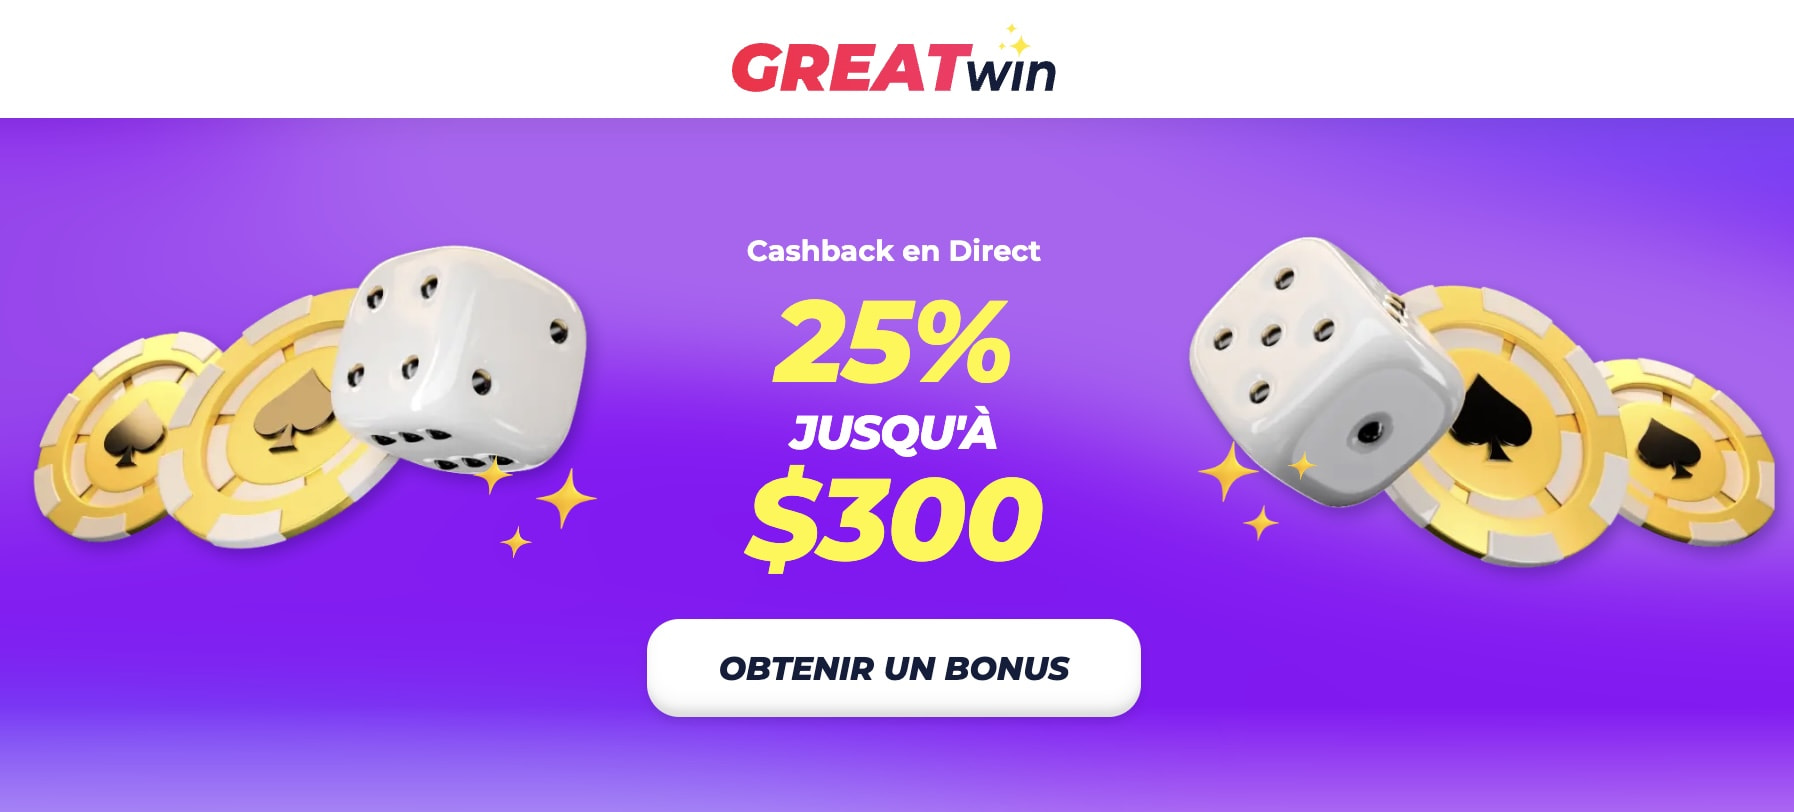 greatwin-bonus-2